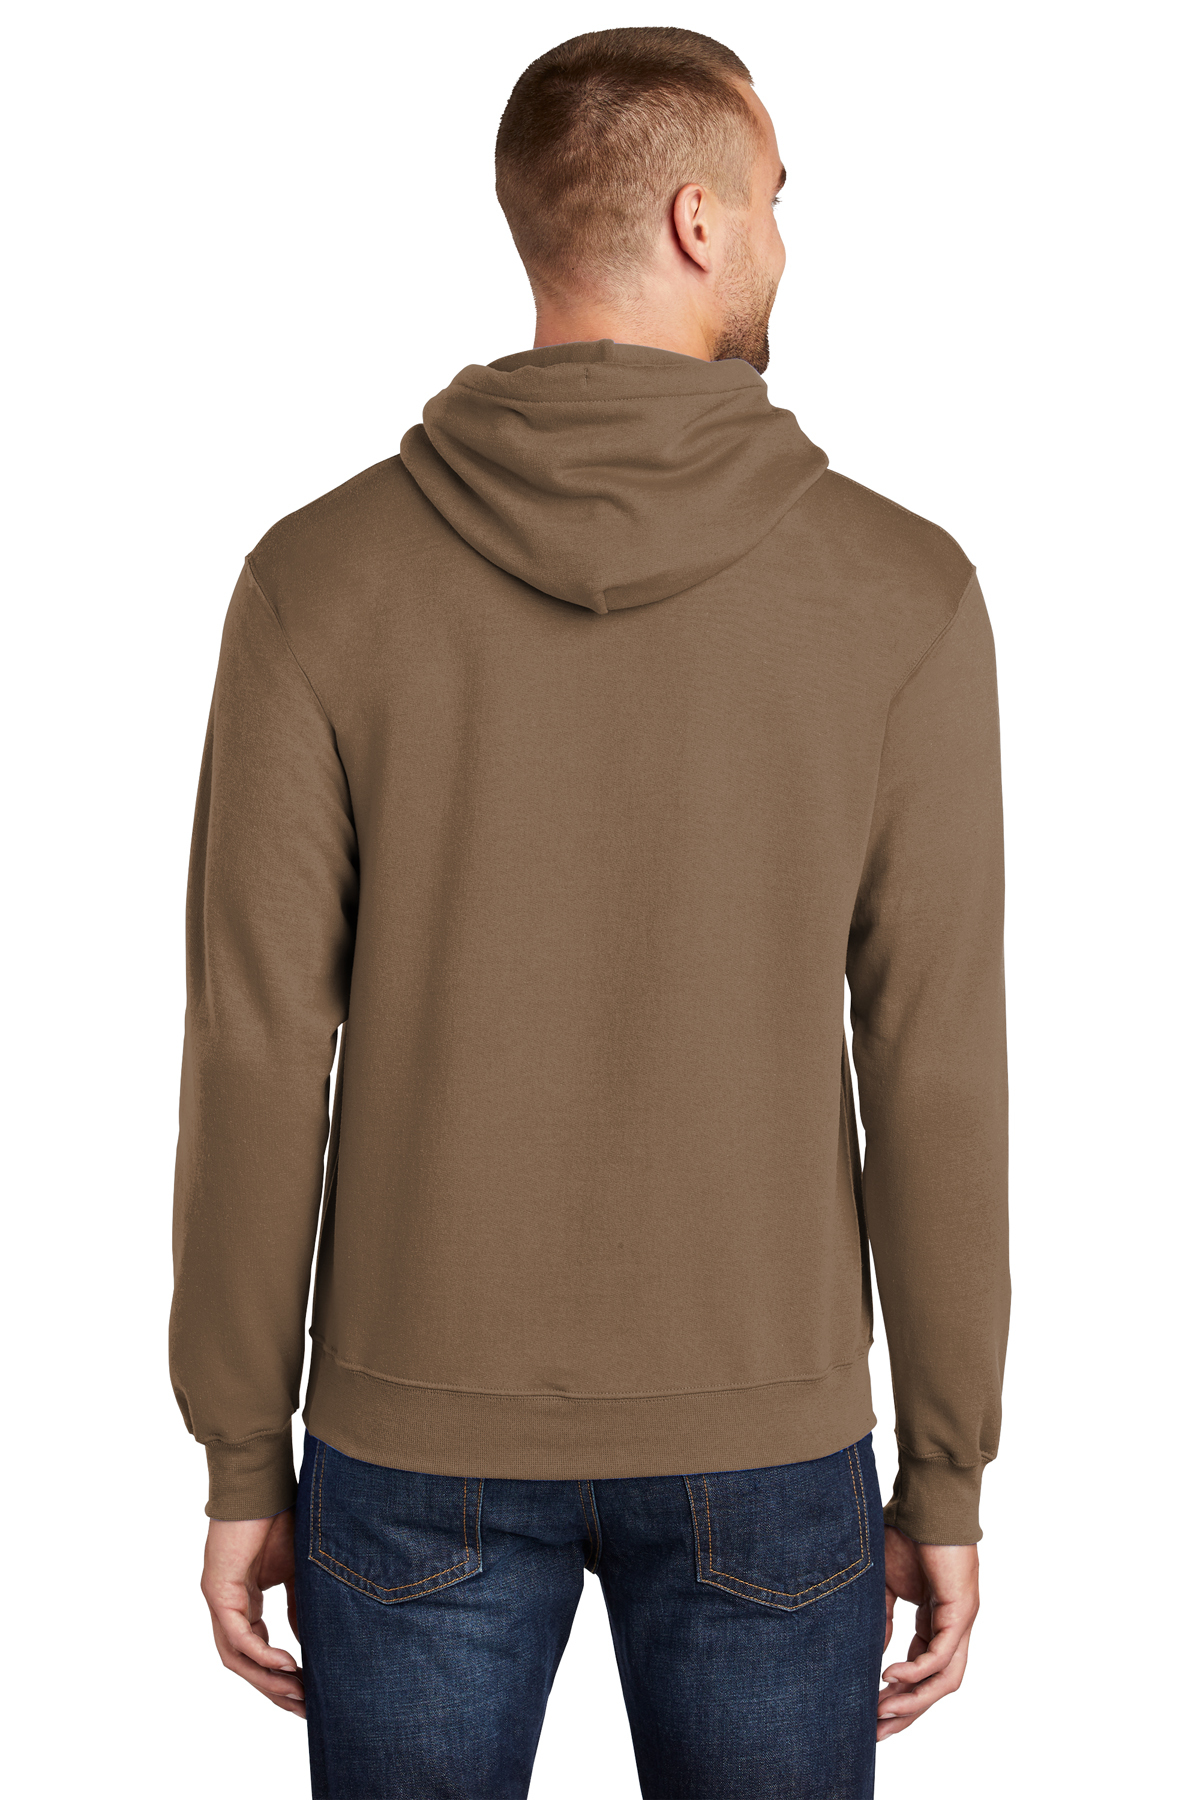 Company Hooded SanMar Product | Core Sweatshirt | Fleece Port & Pullover